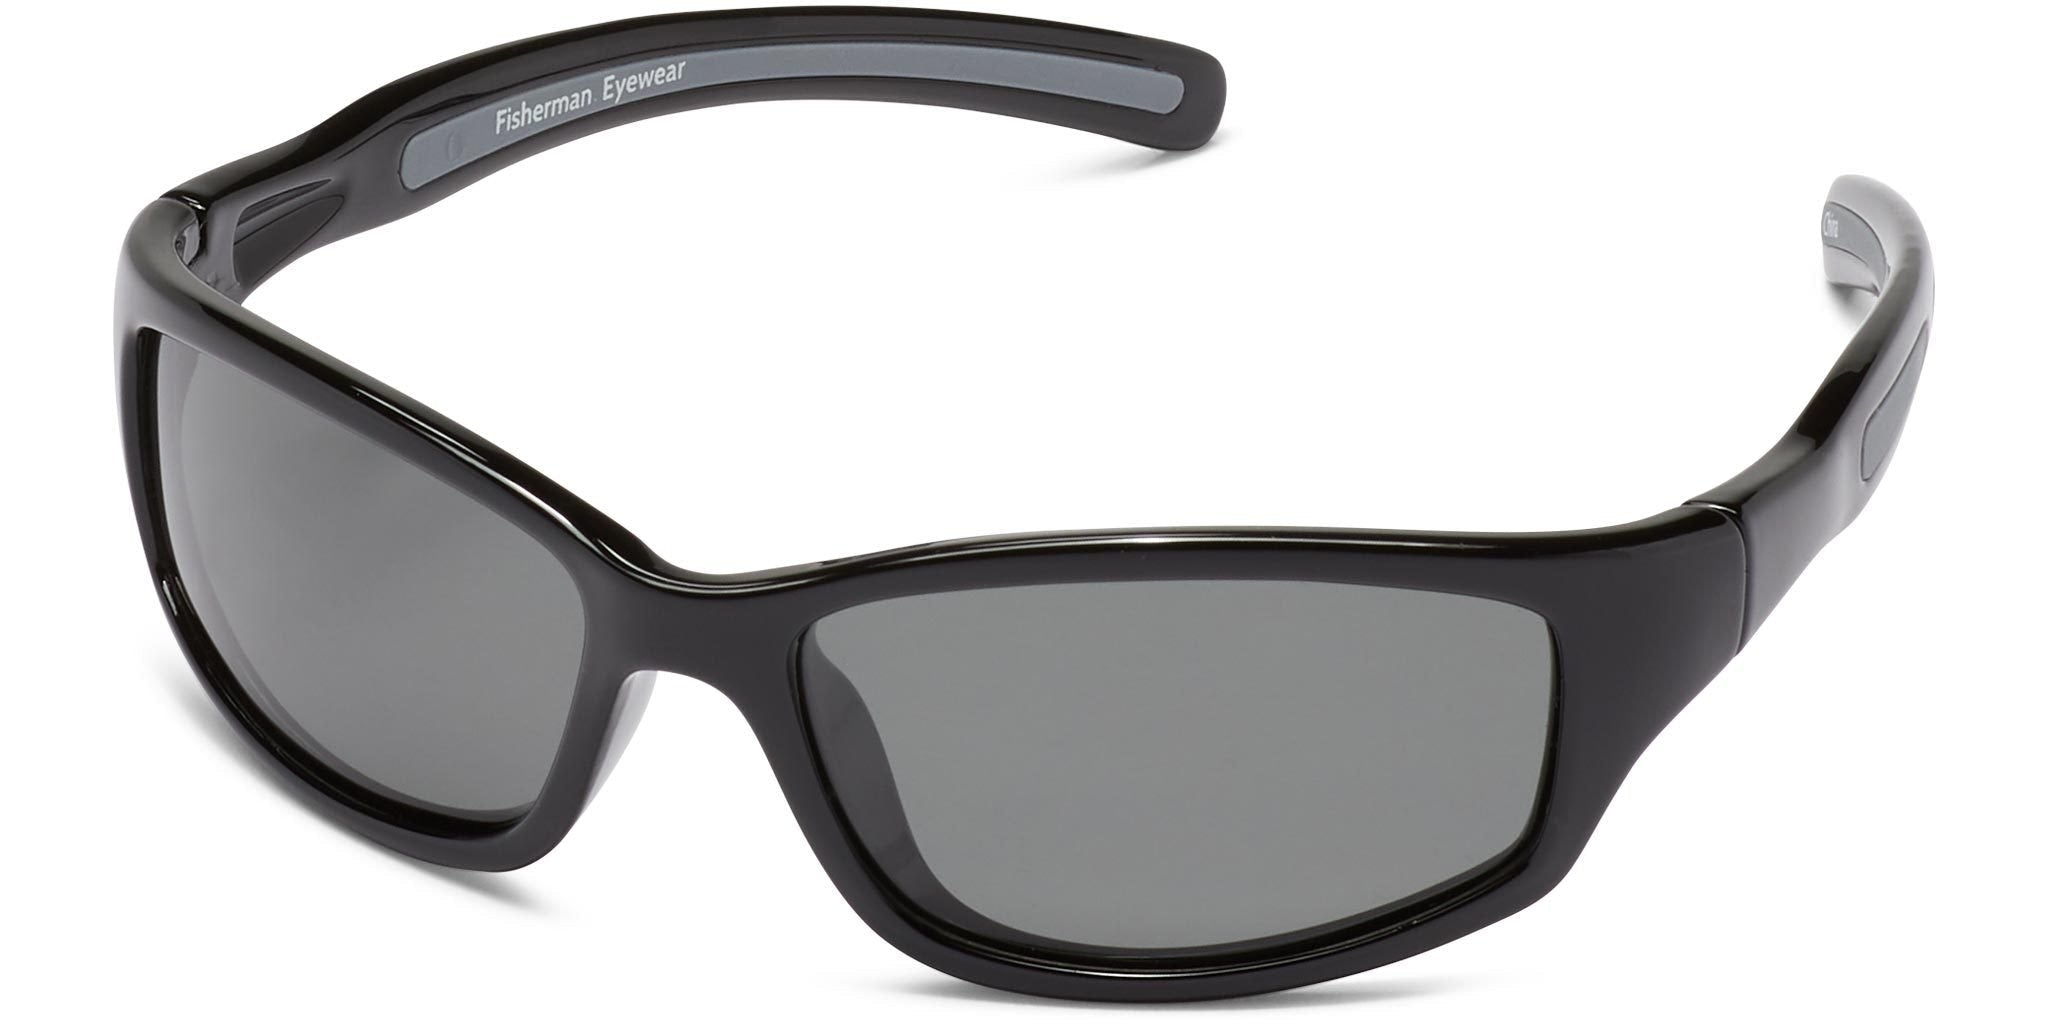 Kids' Sport Sunglasses | Best Price Guarantee at DICK'S